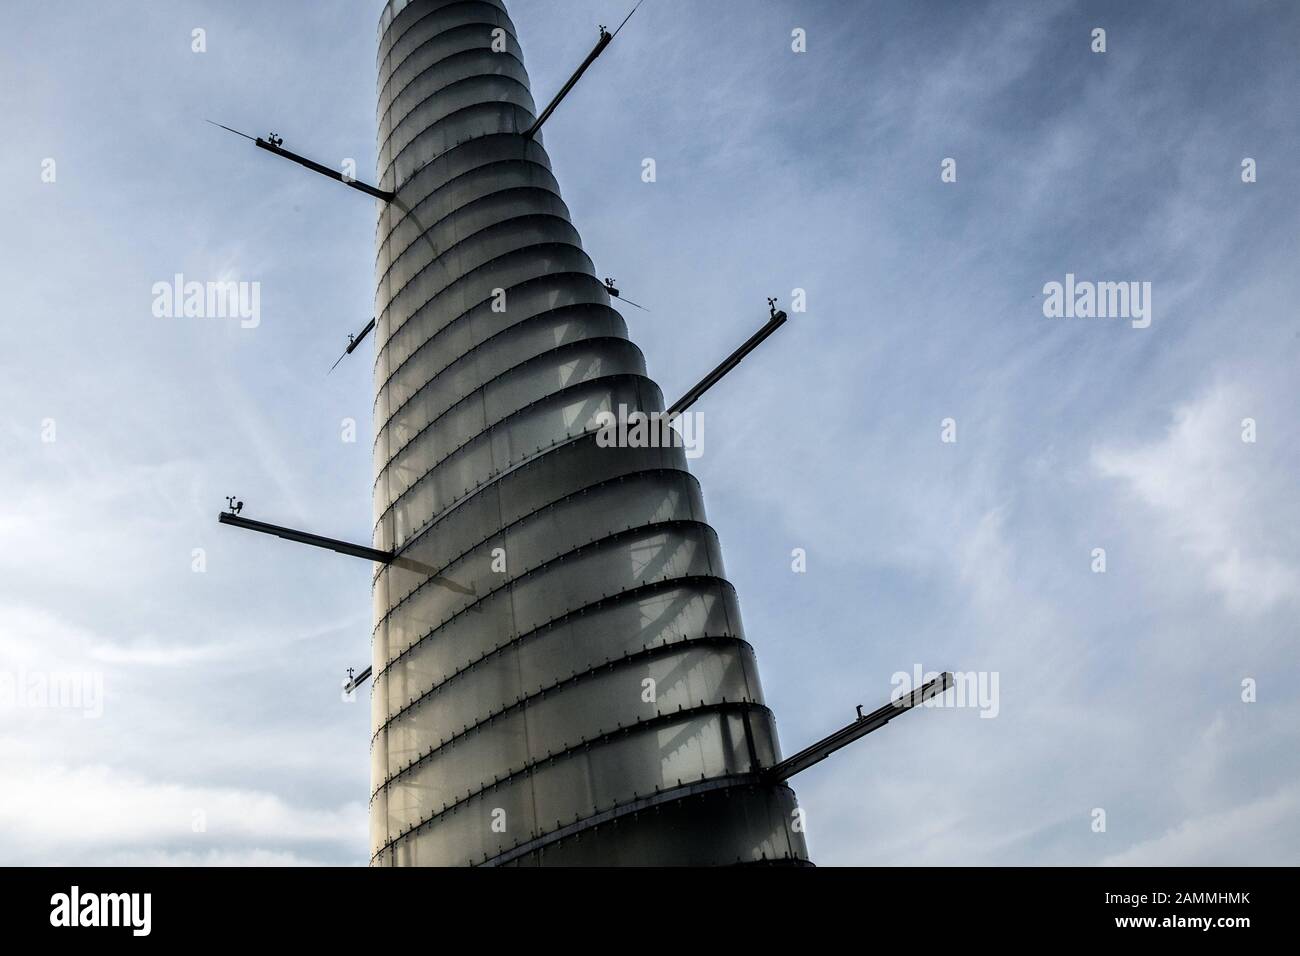 Oskar-von-Miller-Tower, meteorological measuring tower [automated translation] Stock Photo